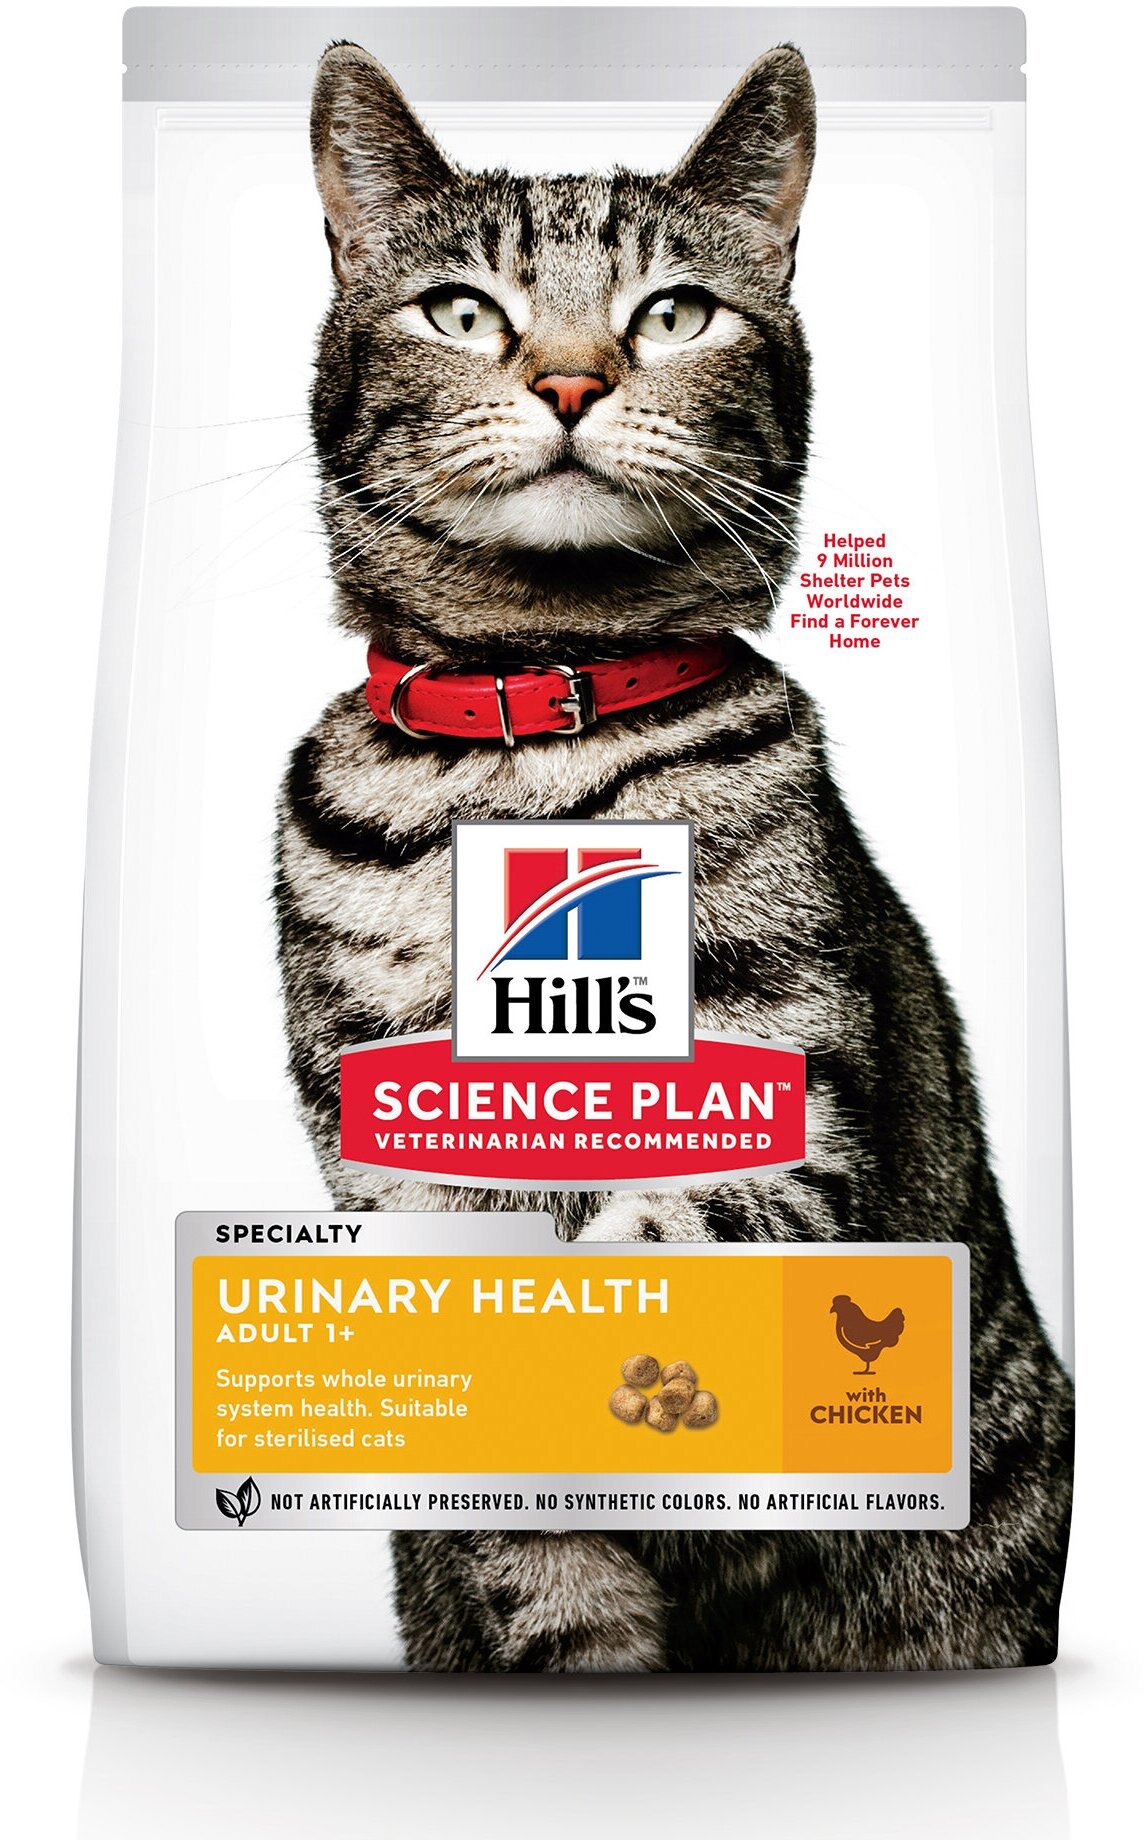 Сухой корм для стерилизованных кошек Hill's Science Plan Urinary Health профилактика МКБ с курицей